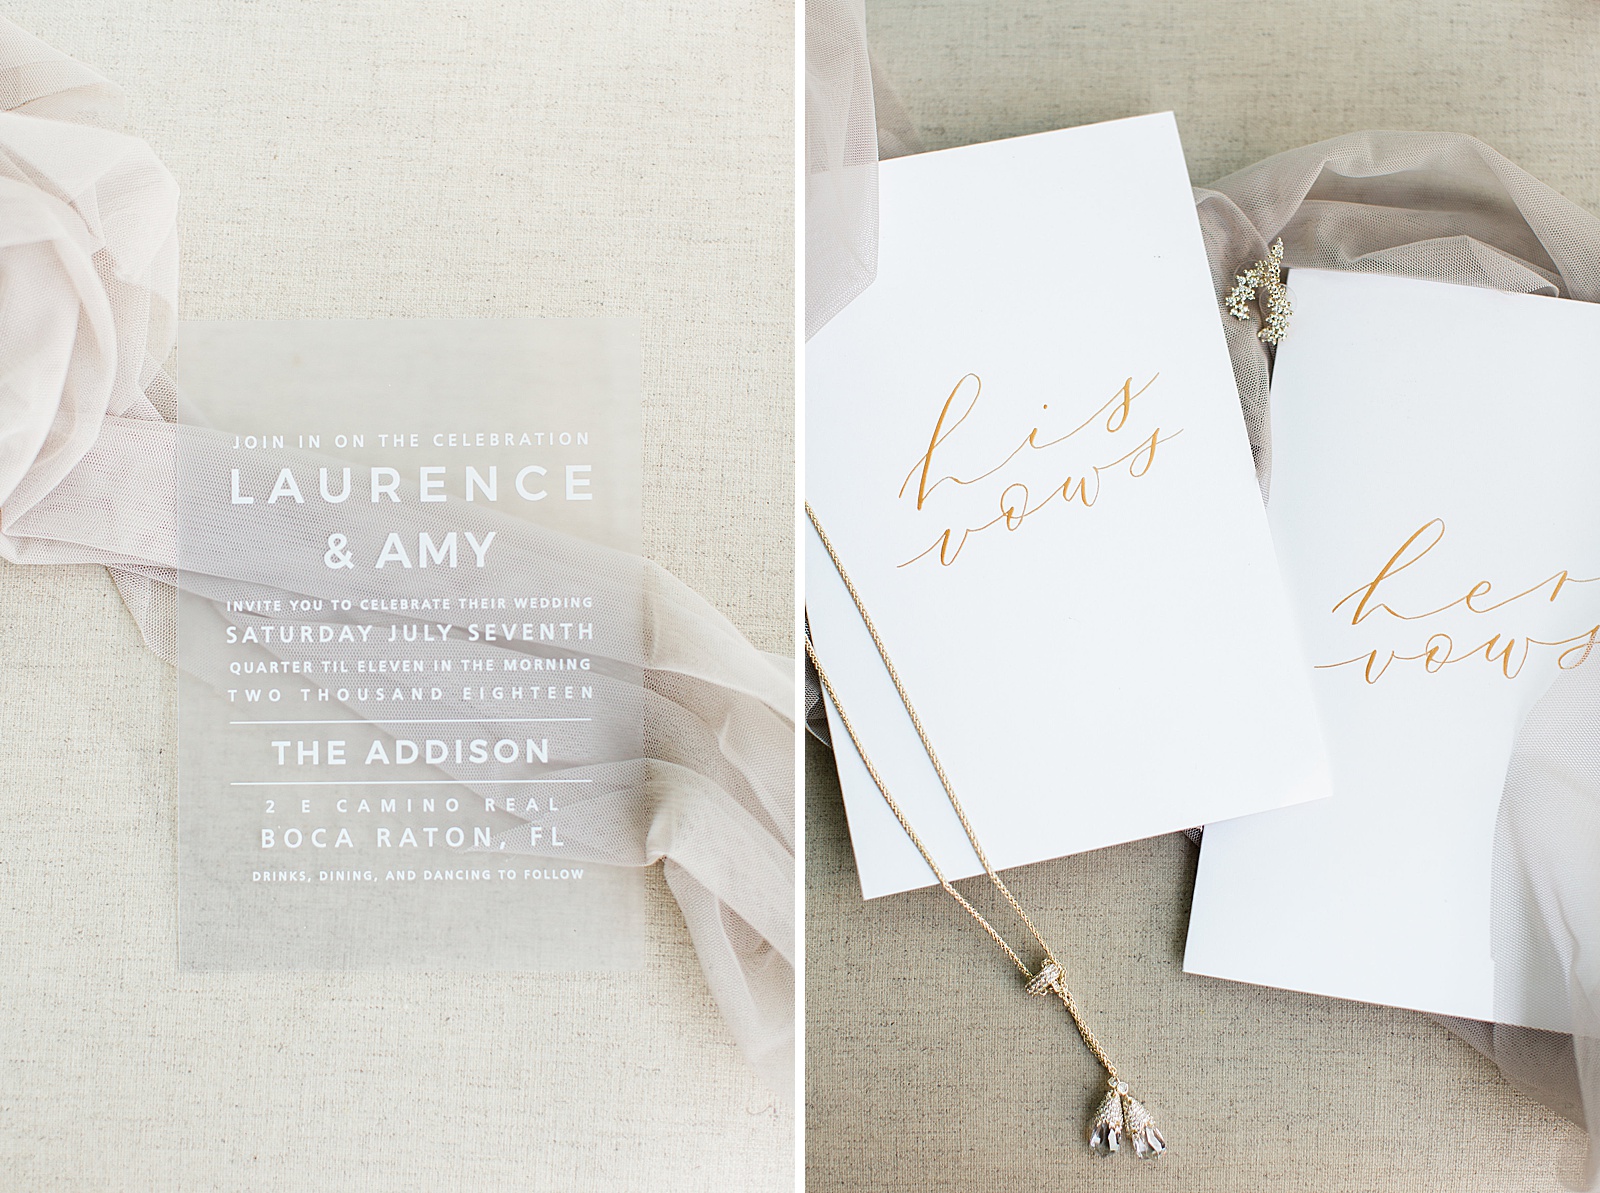 Bridal Details at The Addison designed by NYC Wedding Planner, Poppy + Lynn